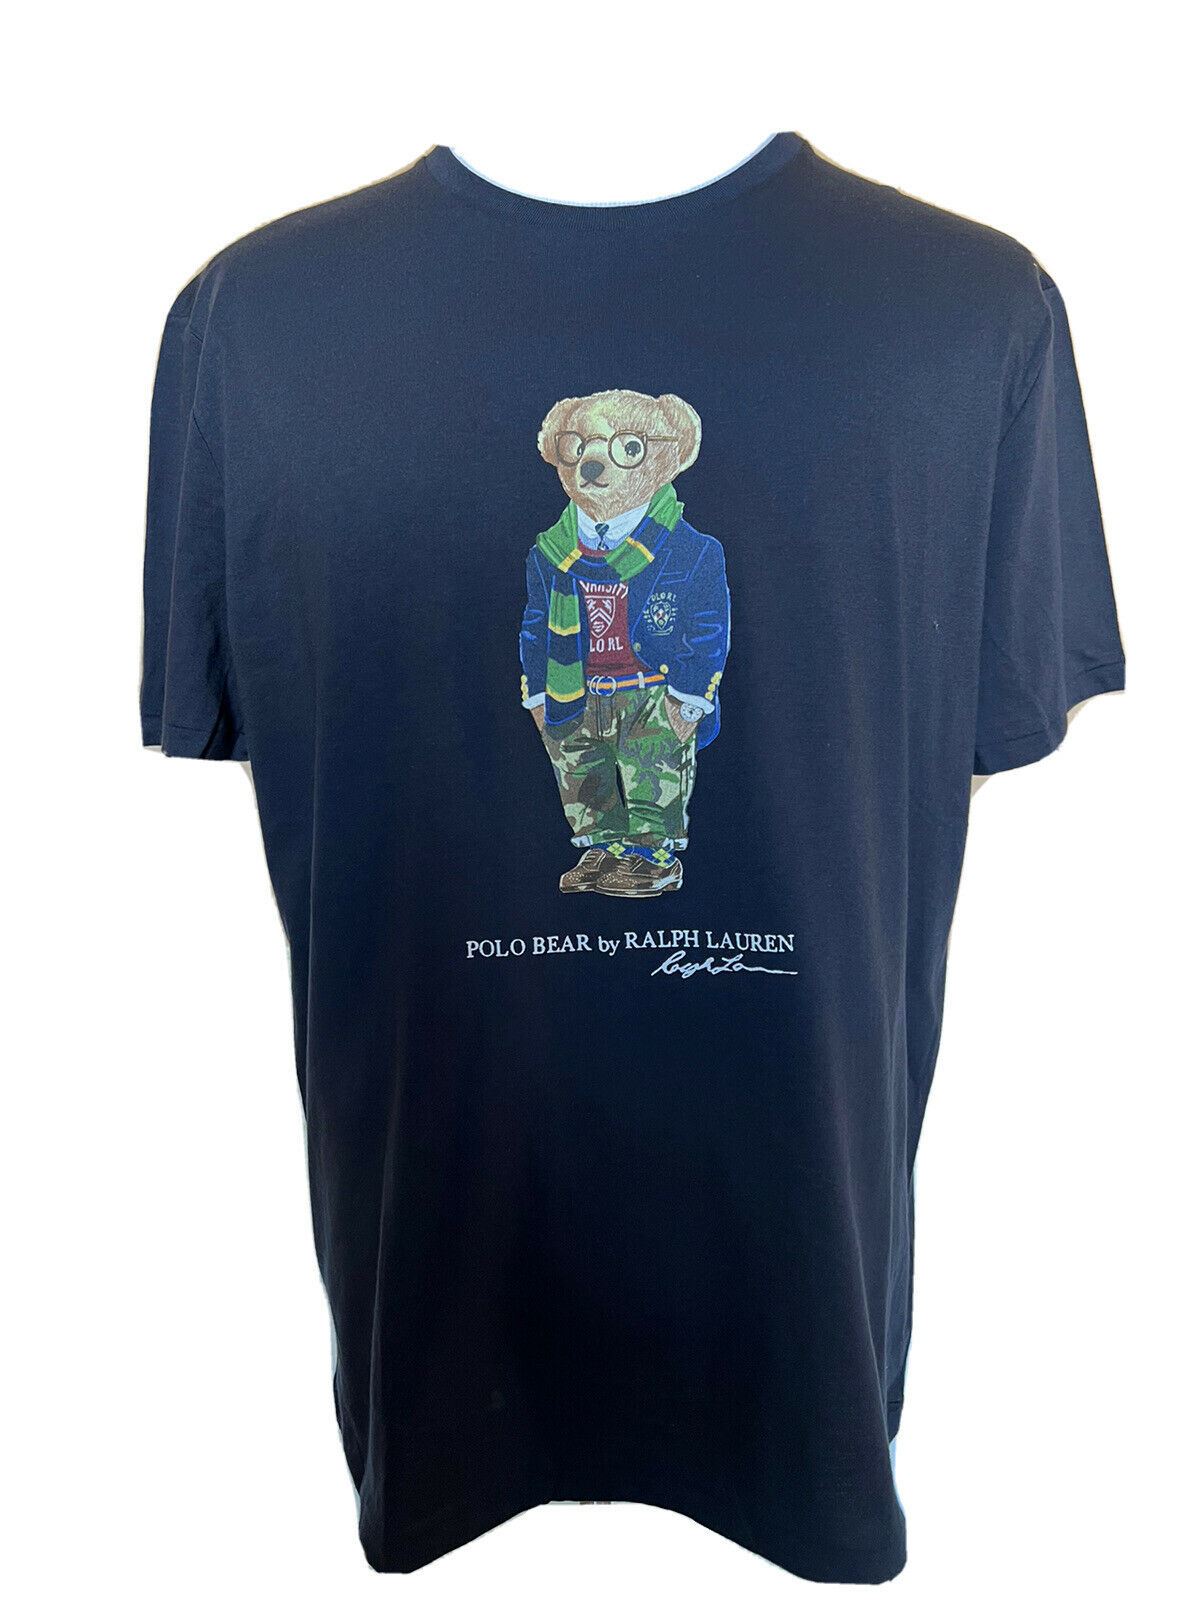 Neu mit Etikett: 59,50 Polo Ralph Lauren Bear T-Shirt Blau Medium